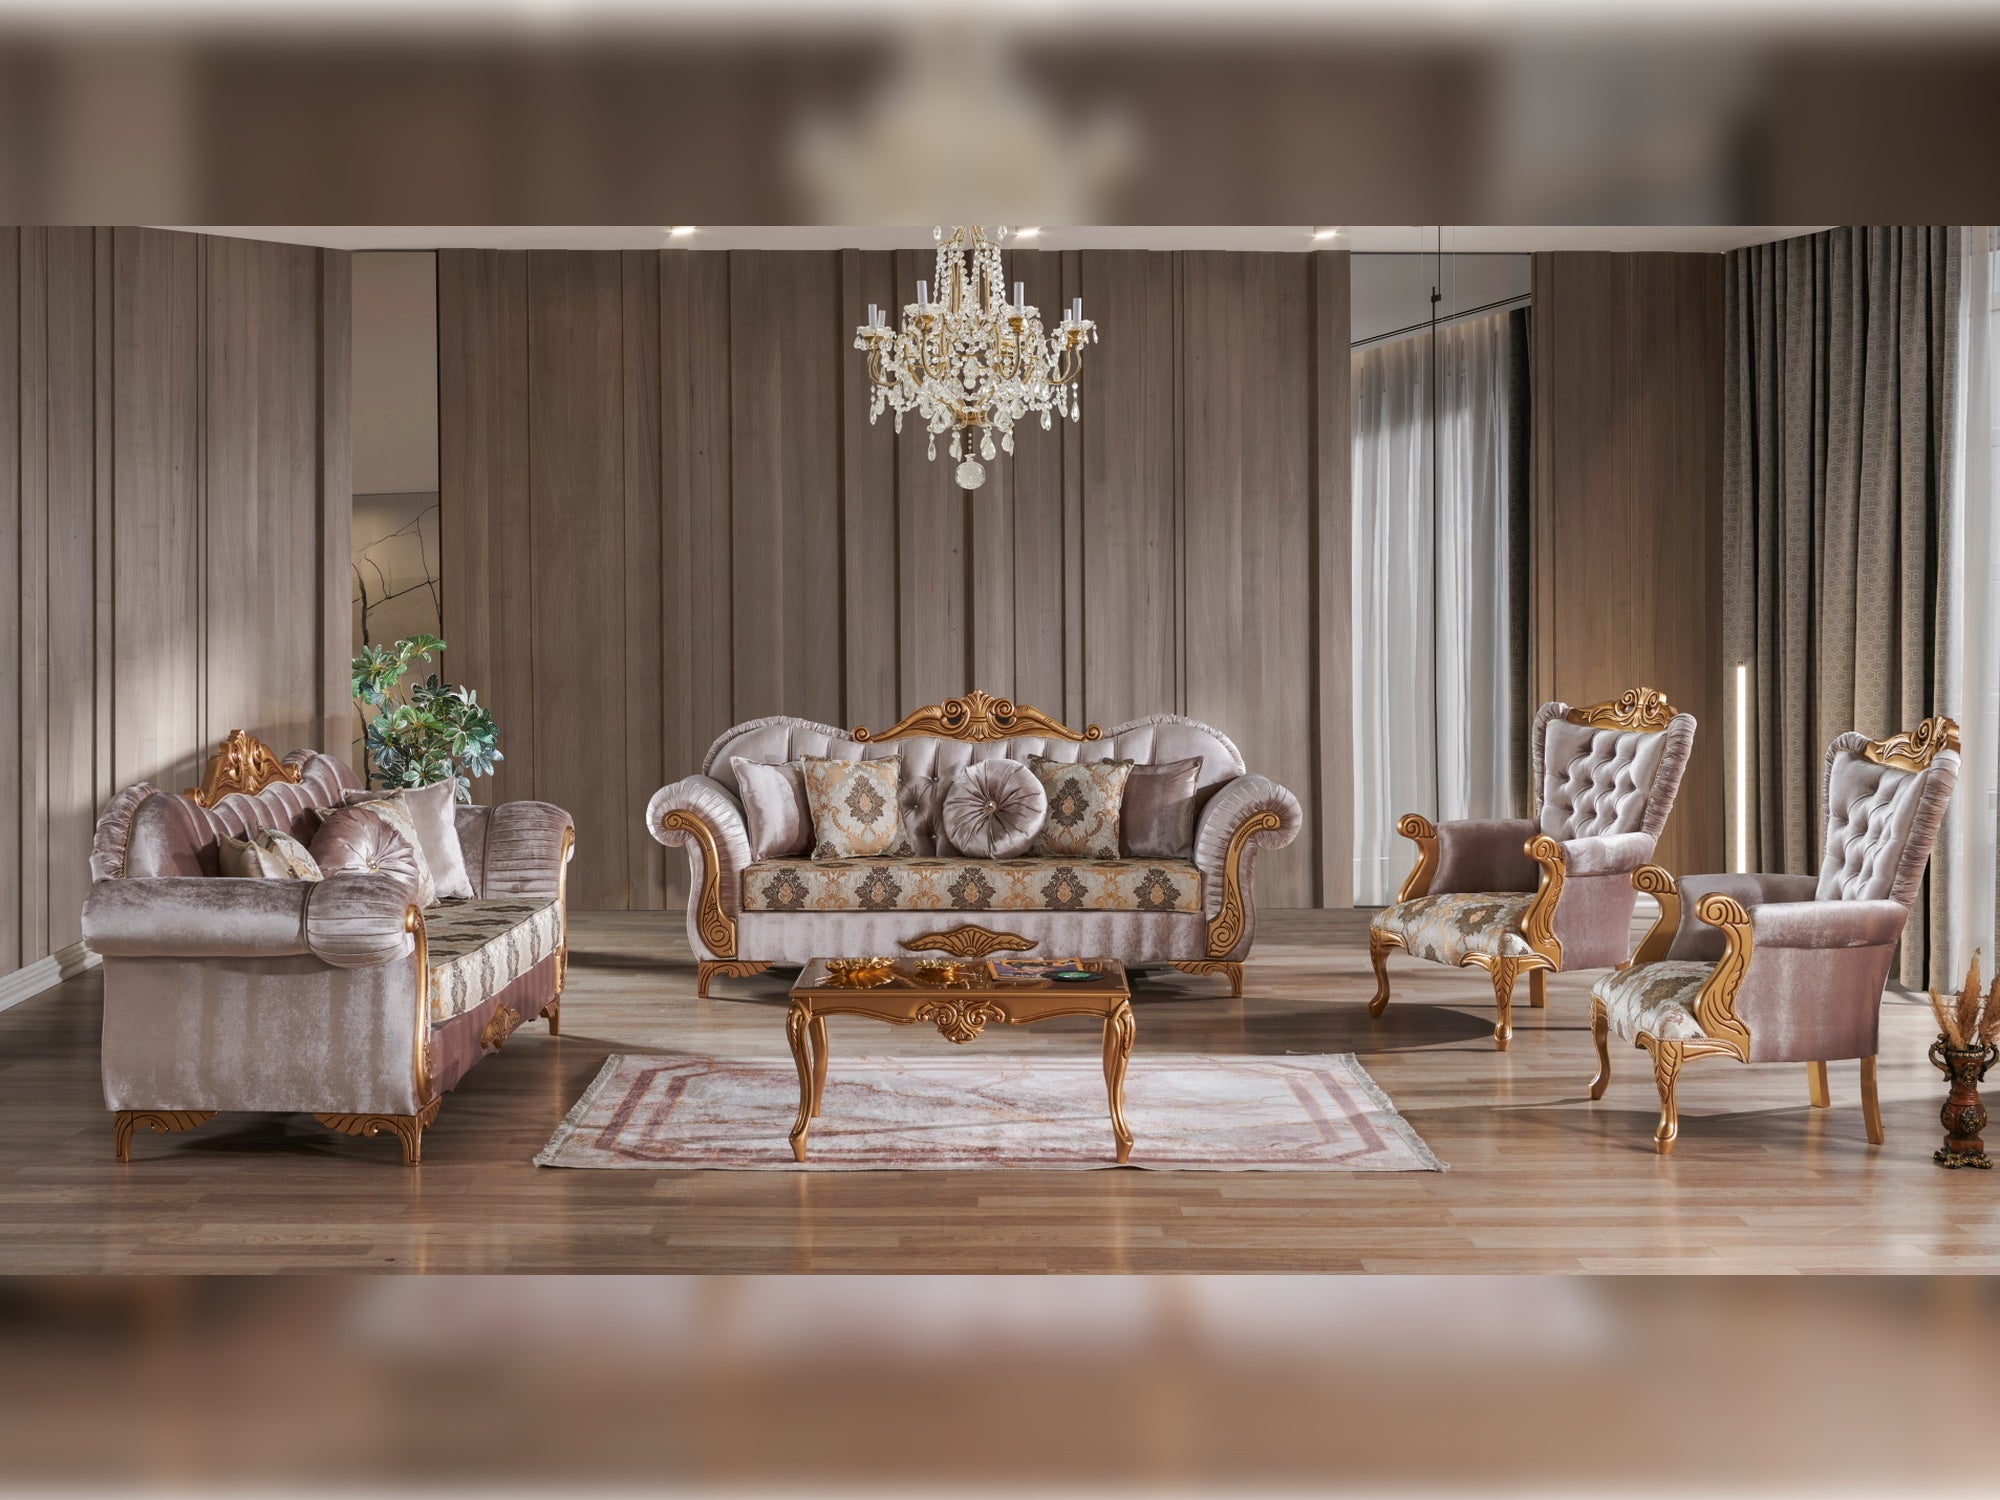 Sultan Traditional Livingroom (2 Sofa & 2 Chair) Cream